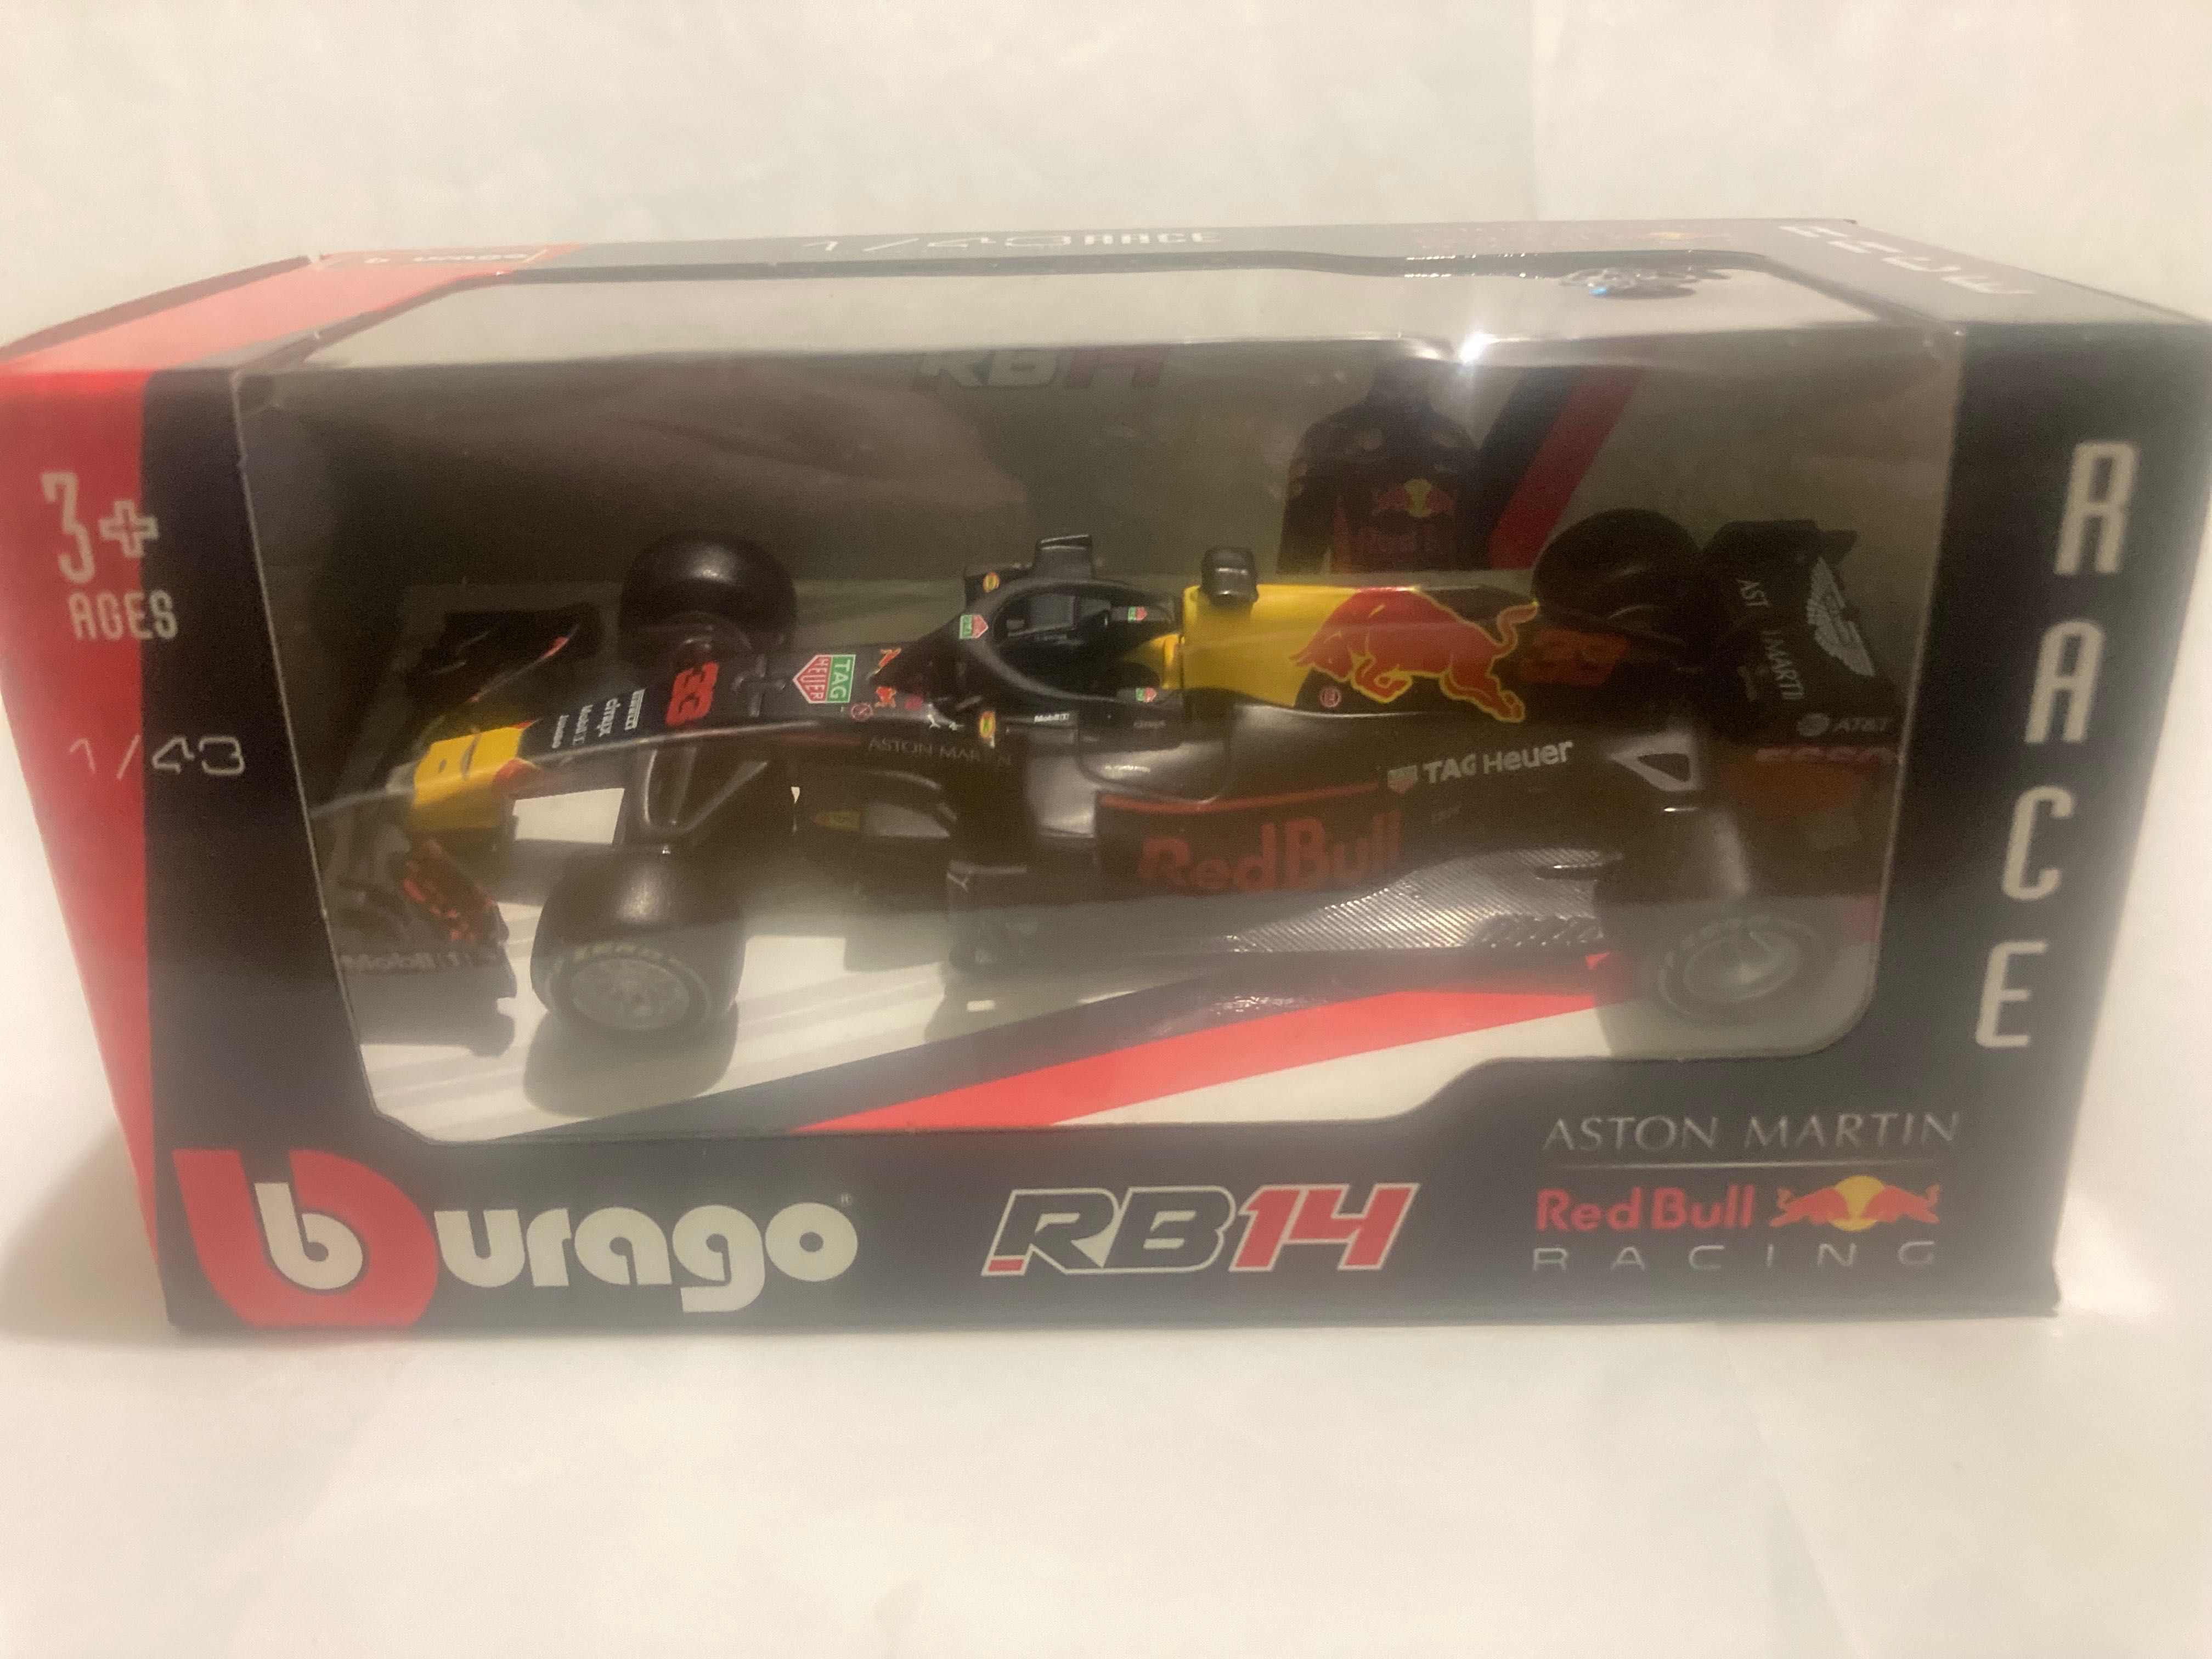 Формула 1 Ред Булл Rb14 2018. 
Макс Ферстаппен №33.